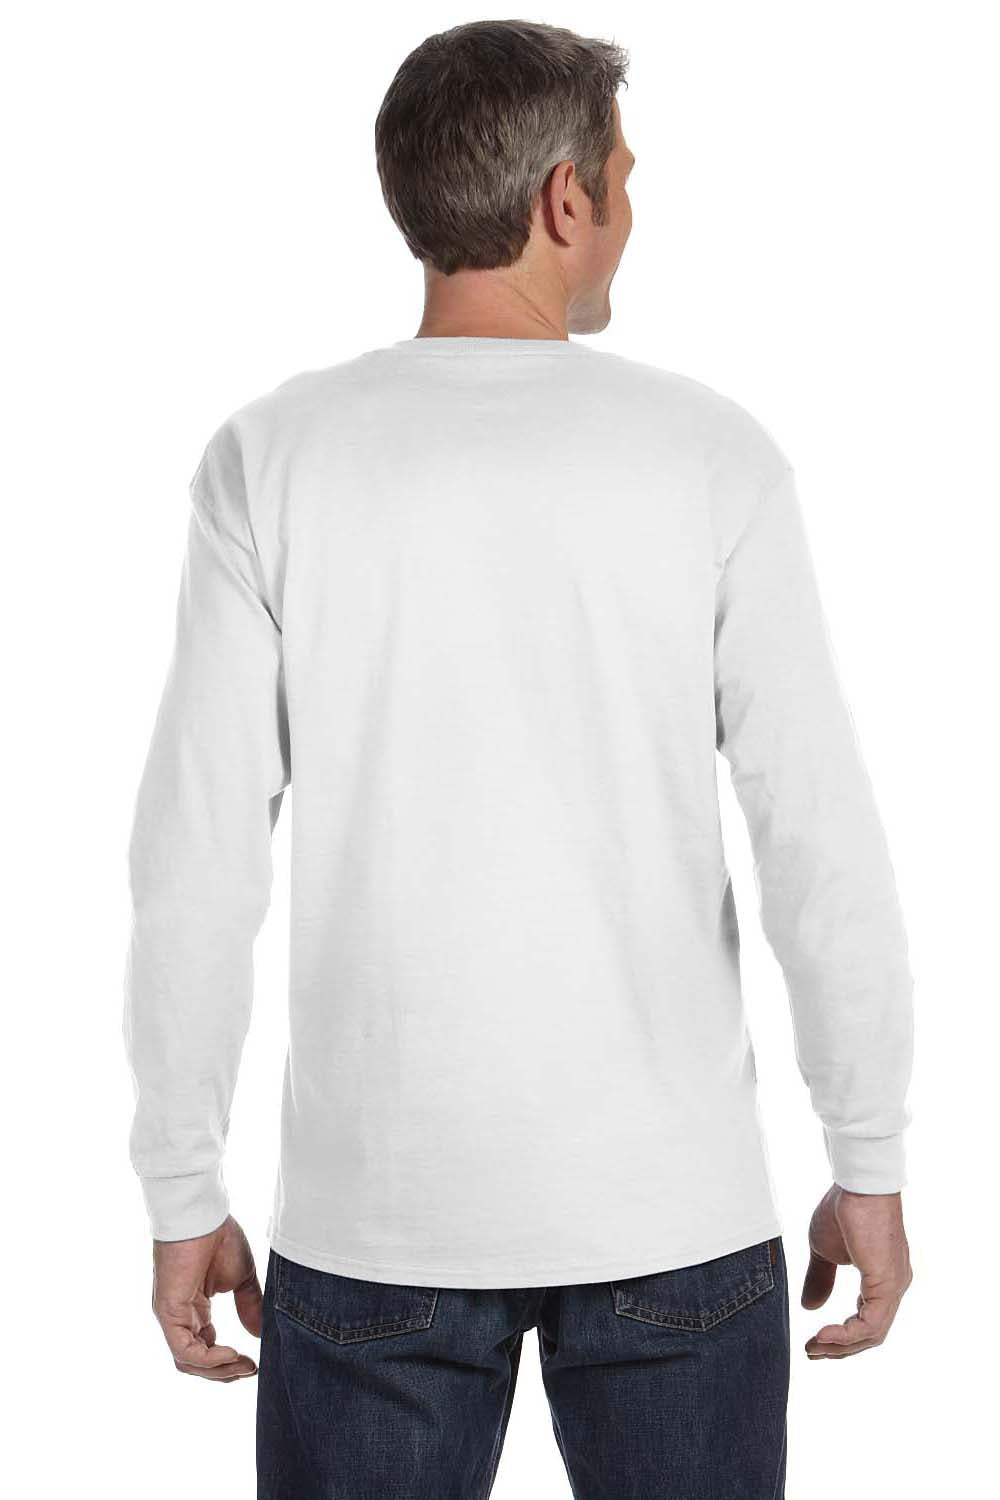 Hanes 5586 Mens ComfortSoft Long Sleeve Crewneck T-Shirt White Back